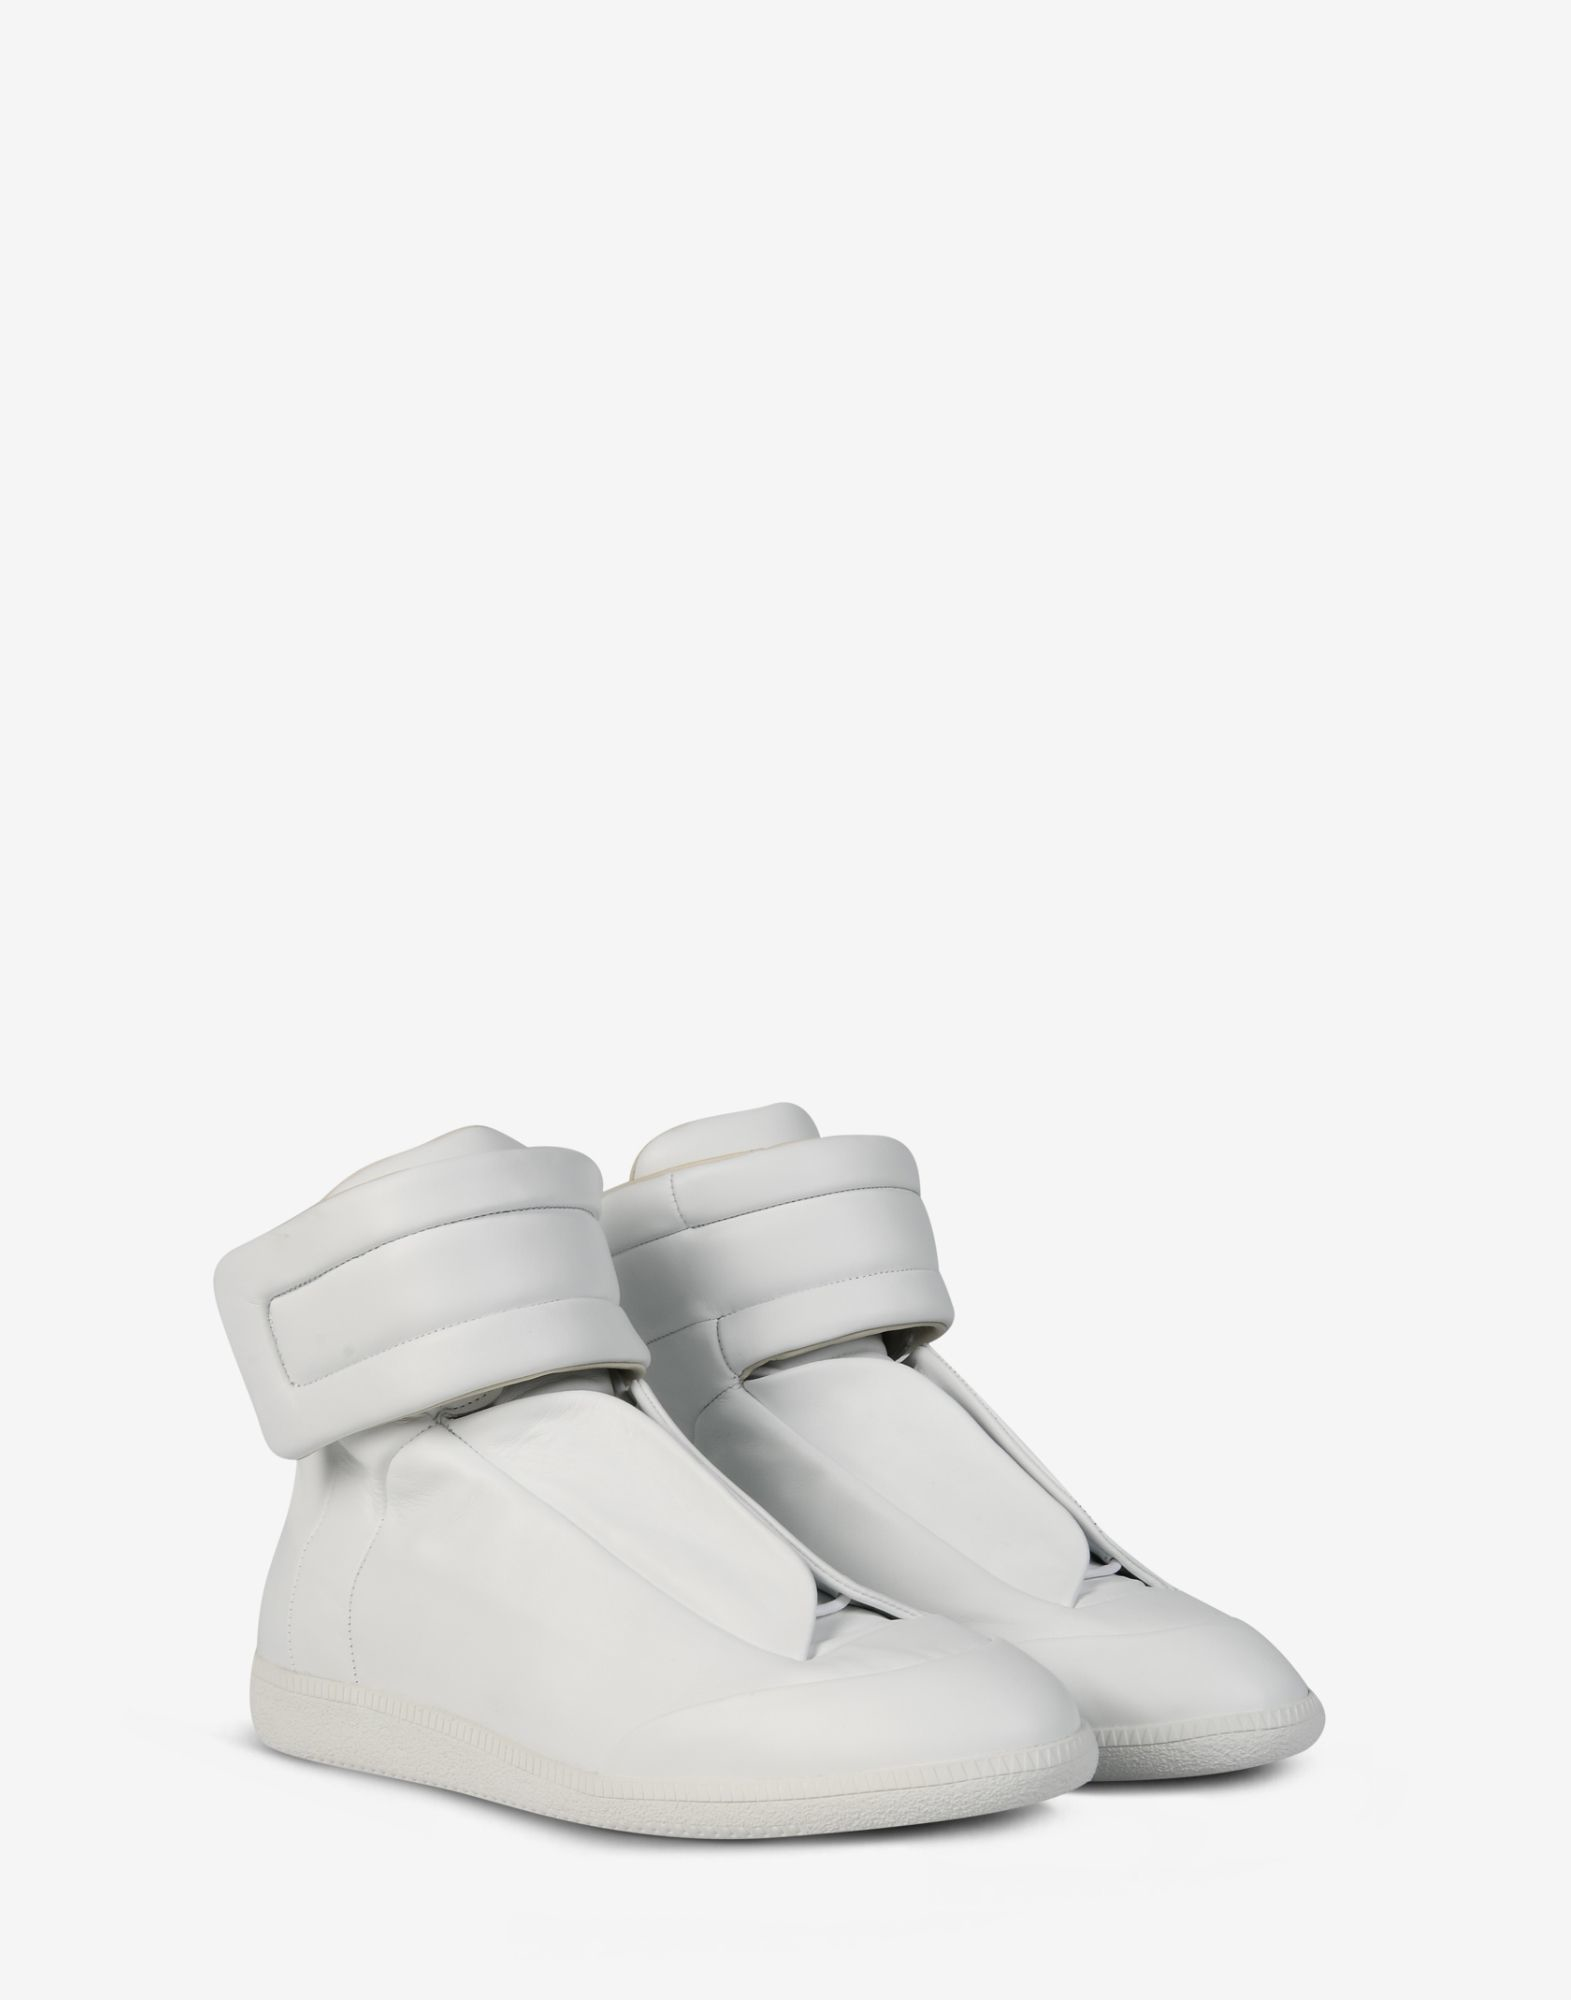 Maison margiela Sneakers in White for Men | Lyst